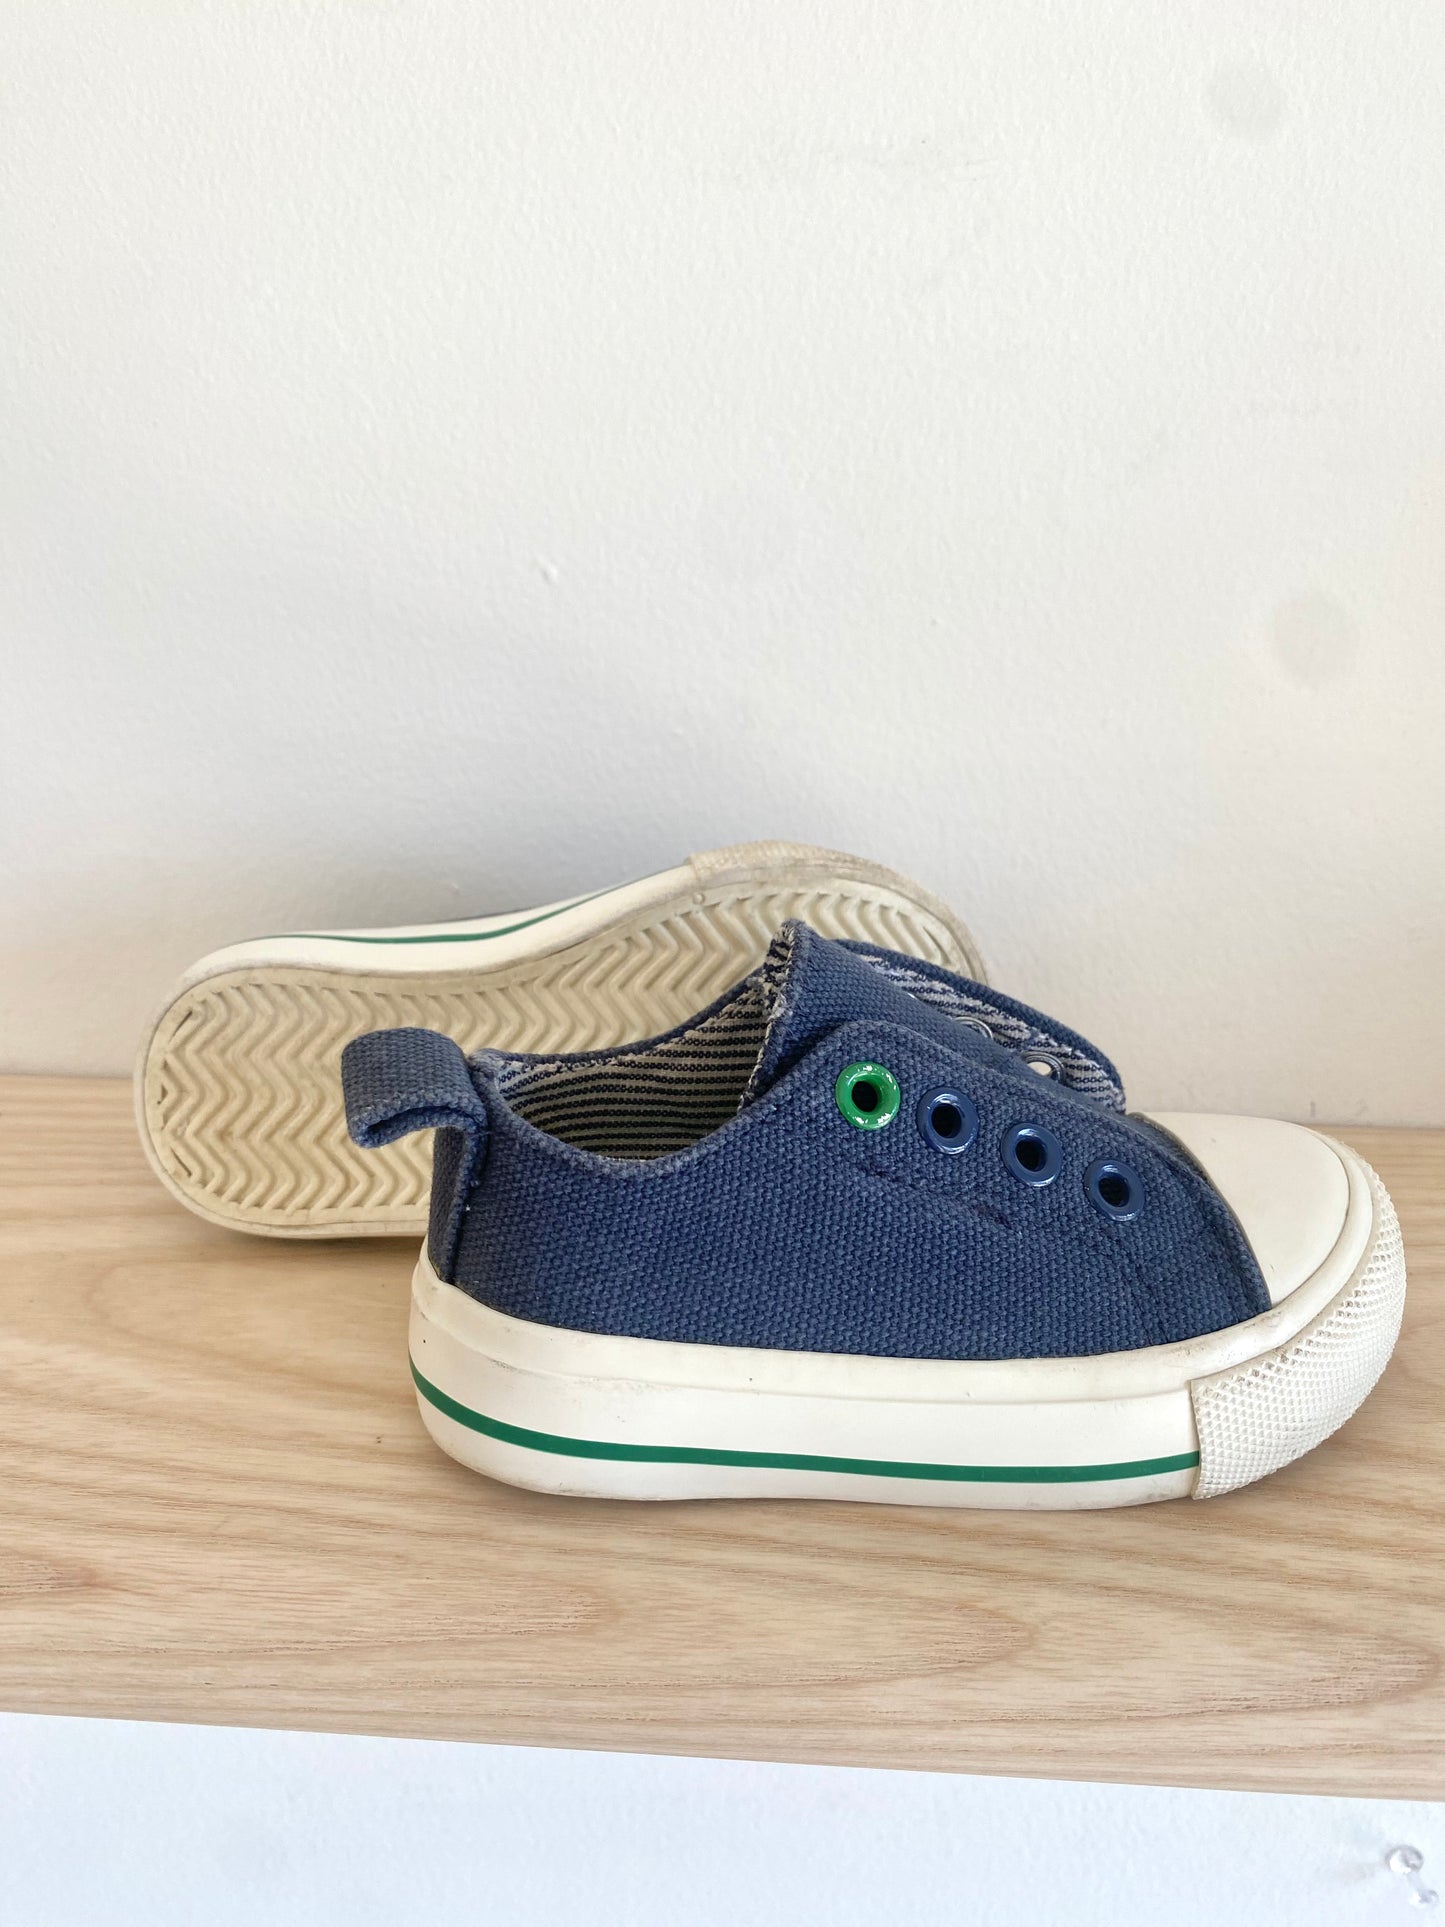 Slip On Blue Shoes / Size 5 Toddler Footwear